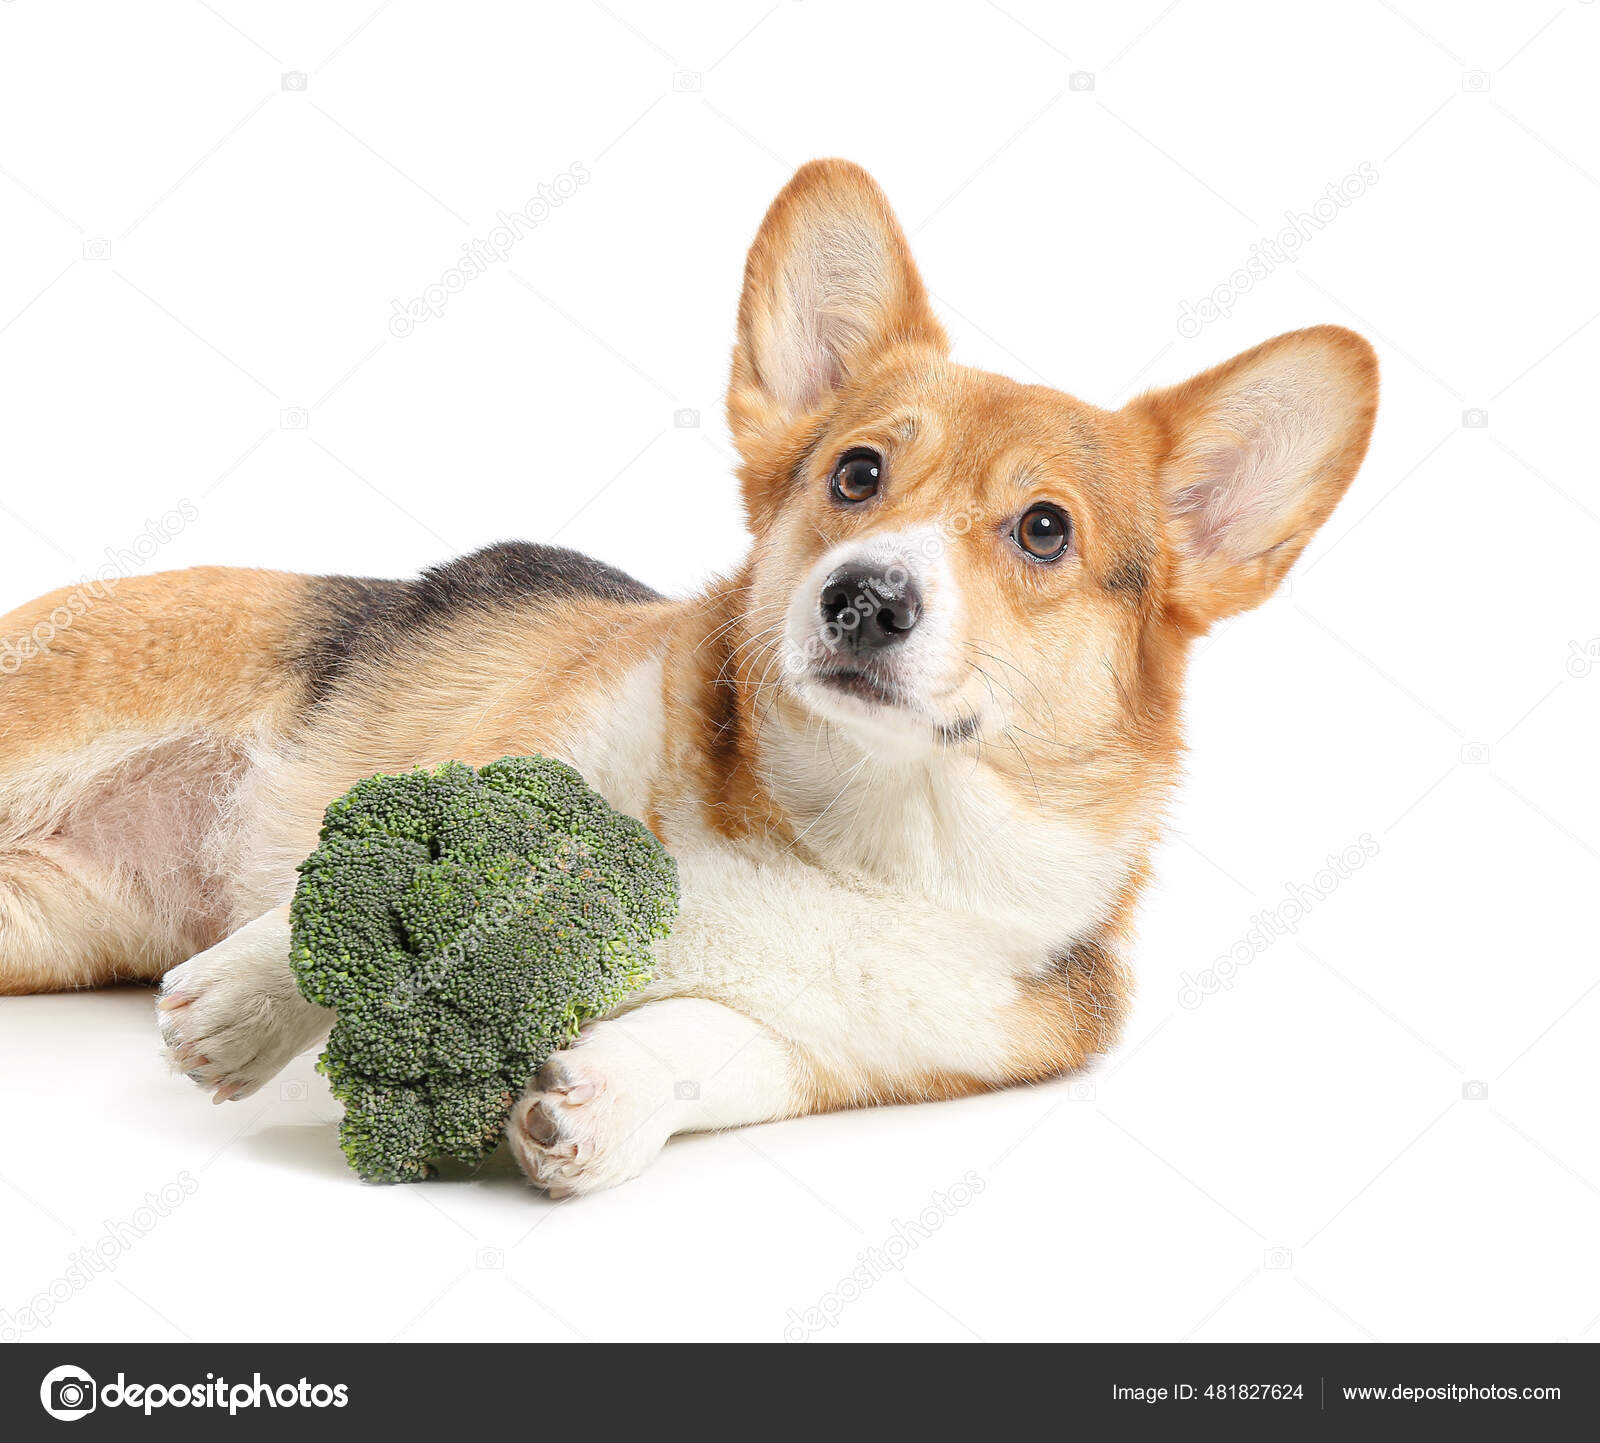 depositphotos_481827624-stock-photo-cute-corgi-dog-broccoli-white.jpg